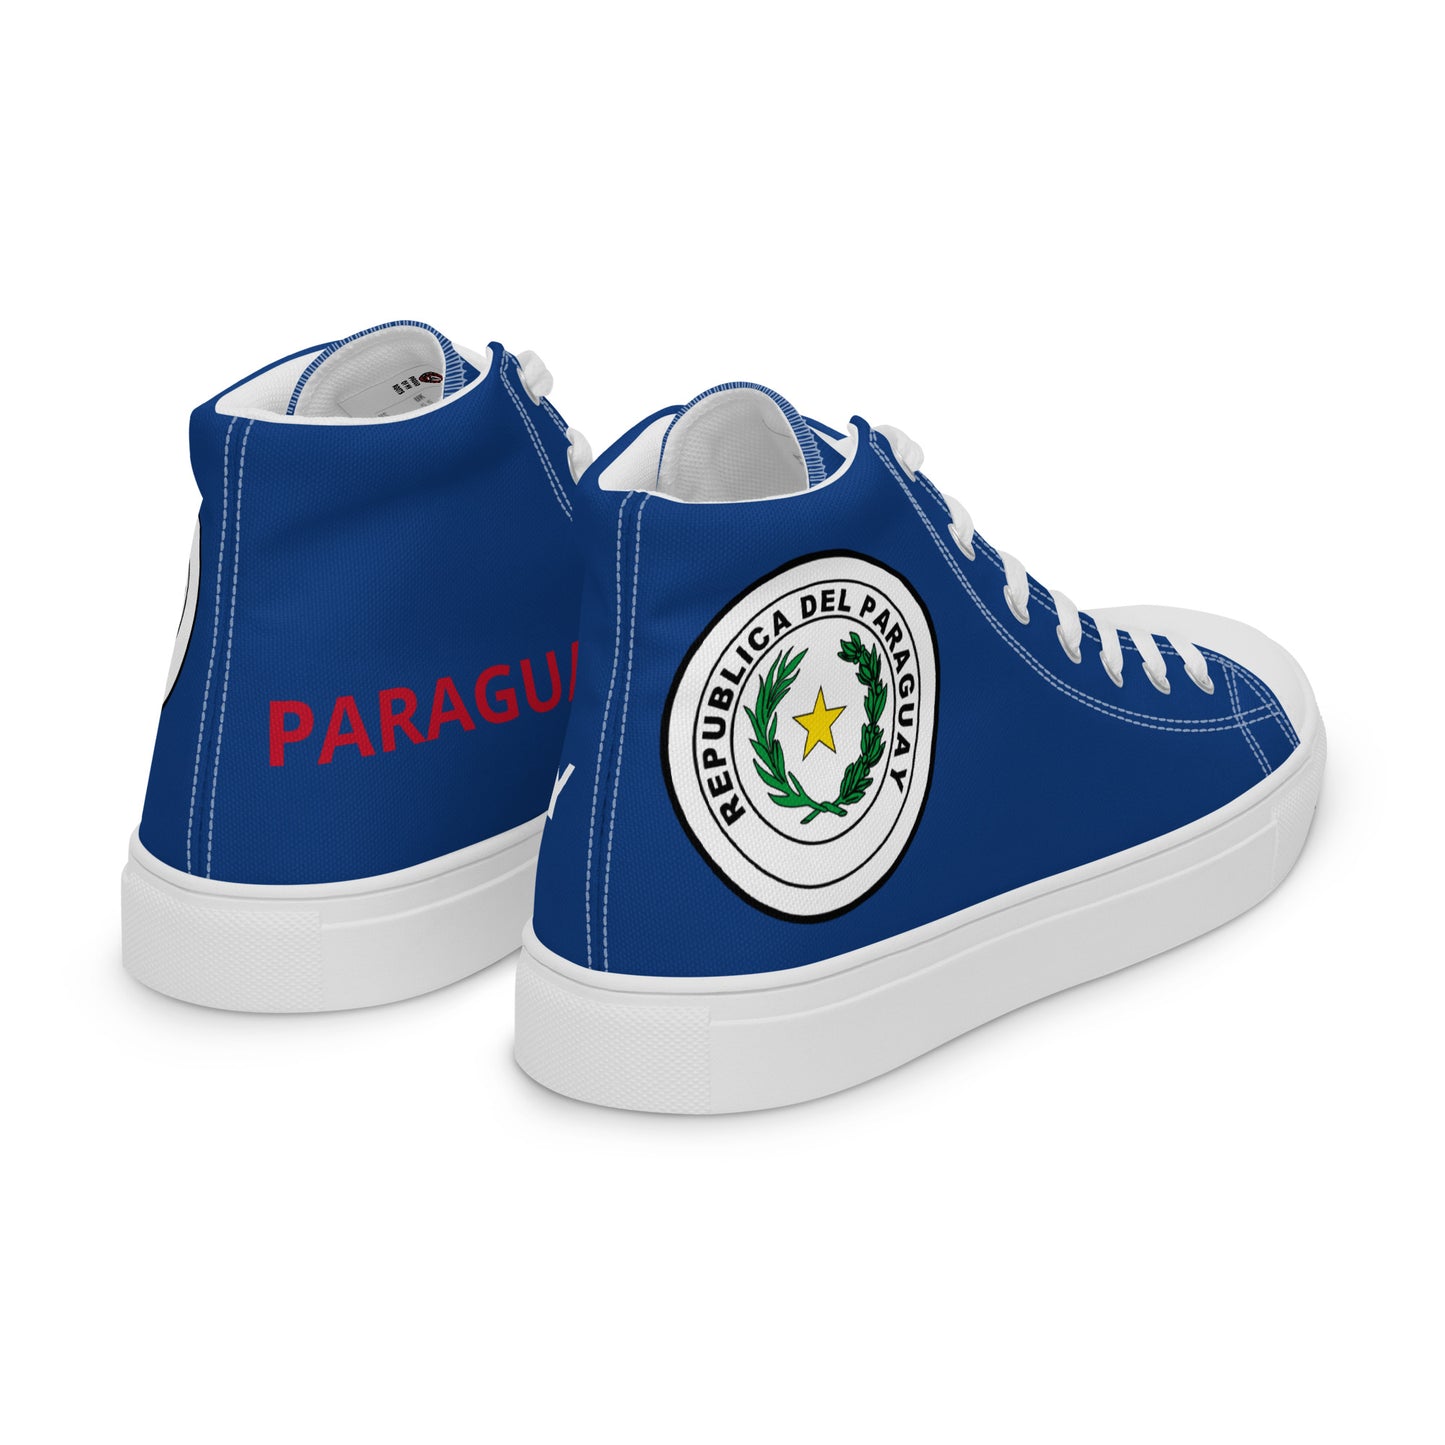 Paraguay - Women - Blue - High top shoes